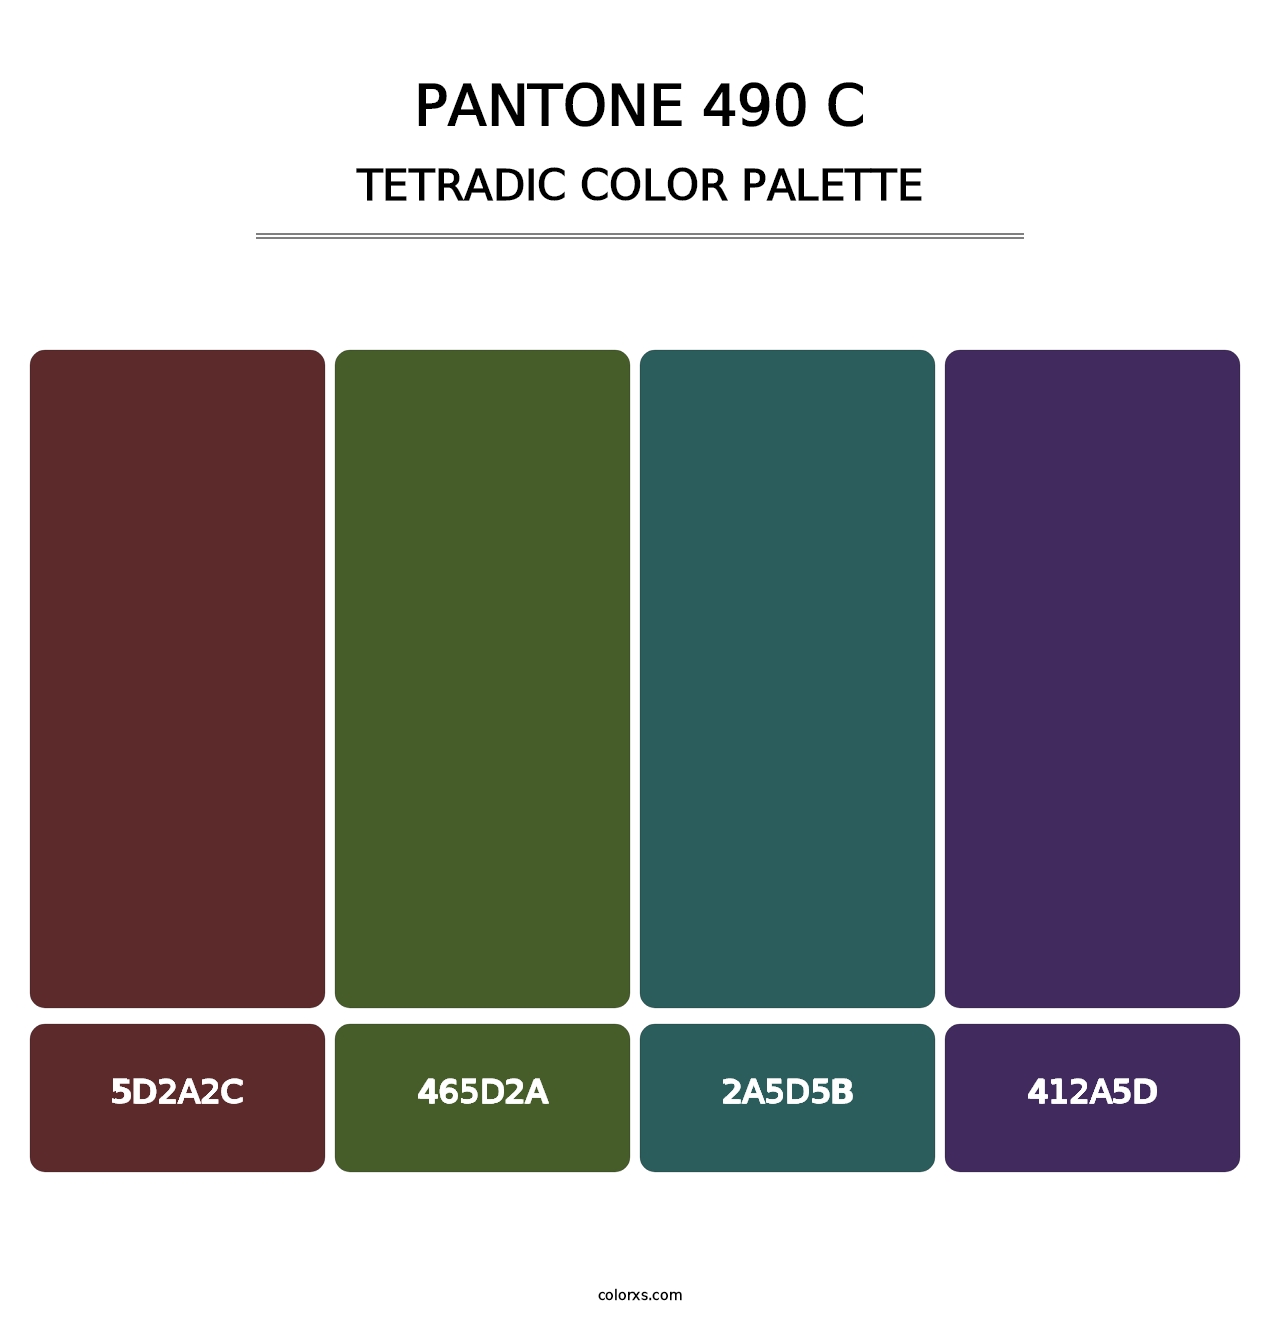 PANTONE 490 C - Tetradic Color Palette